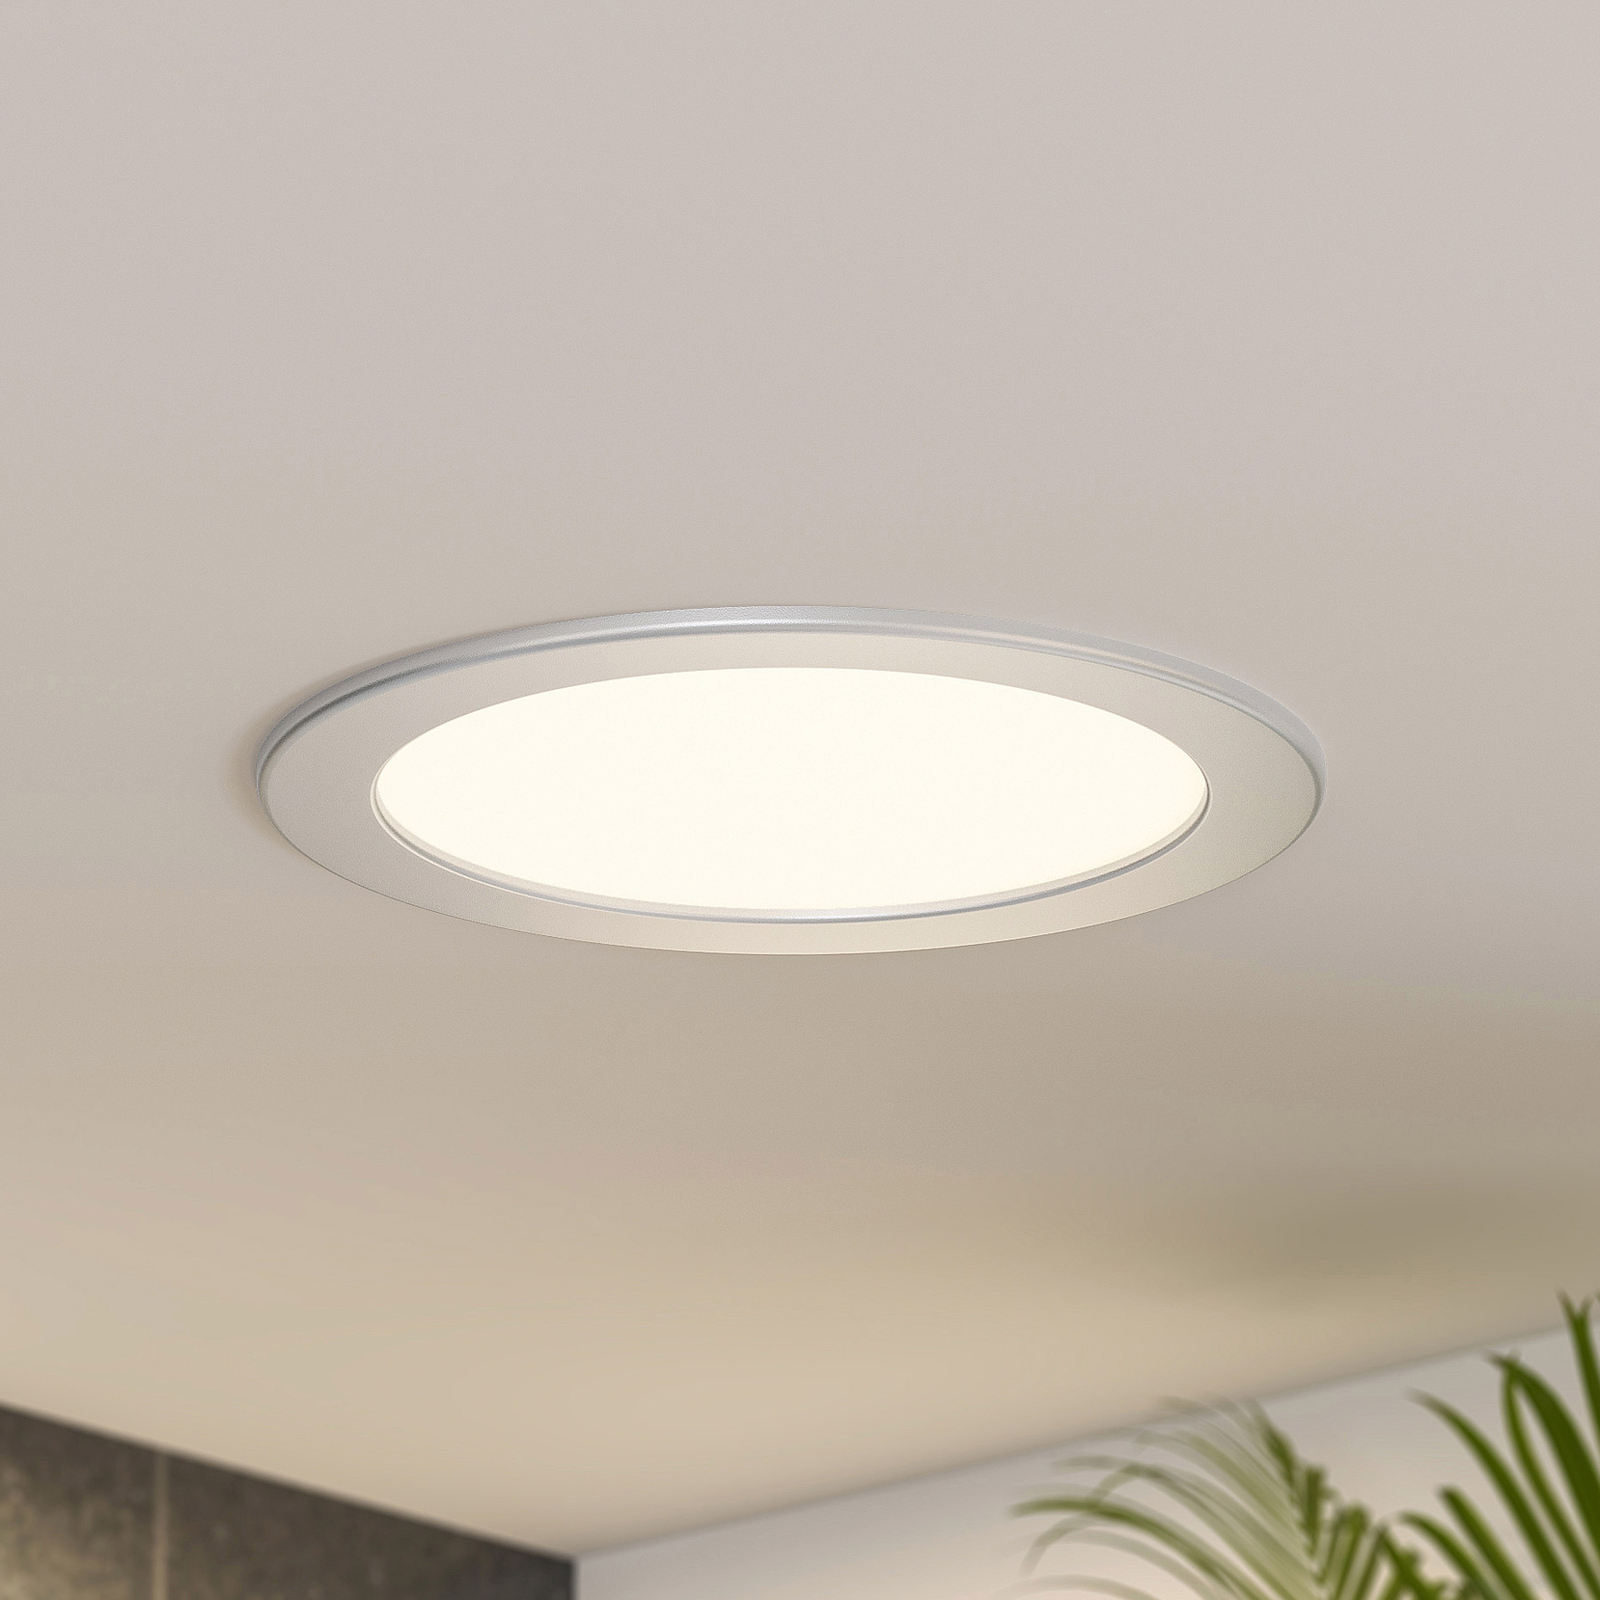 Prios Cadance LED-Einbaulampe, silber, 22 cm